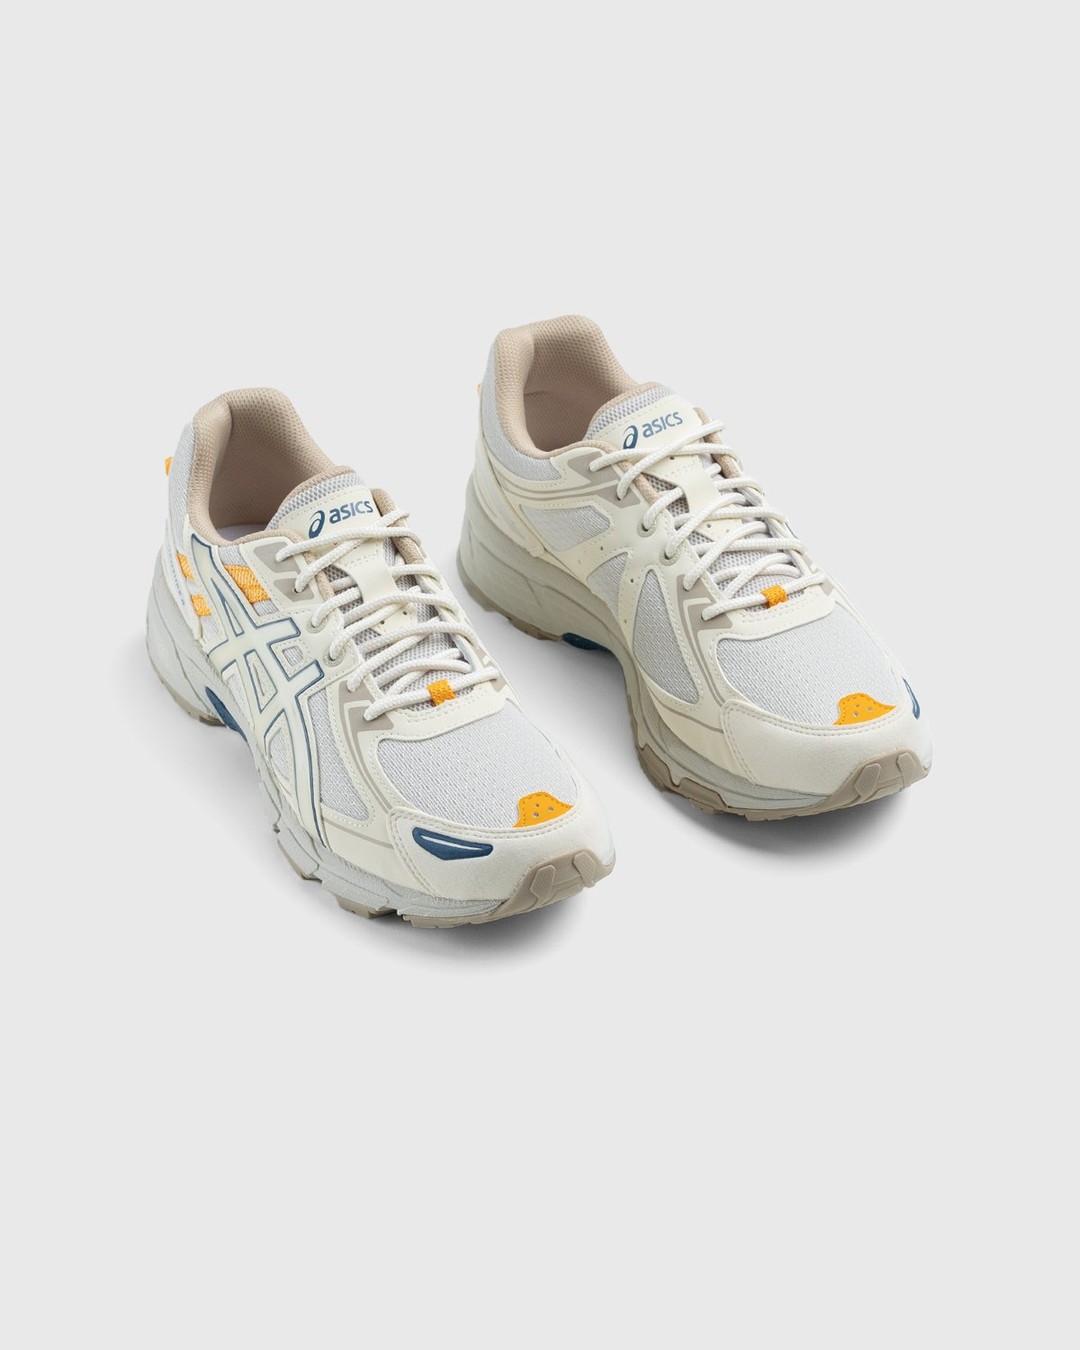 asics – Gel-Venture 6 Smoke Grey Birch - Low Top Sneakers - White - Image 3